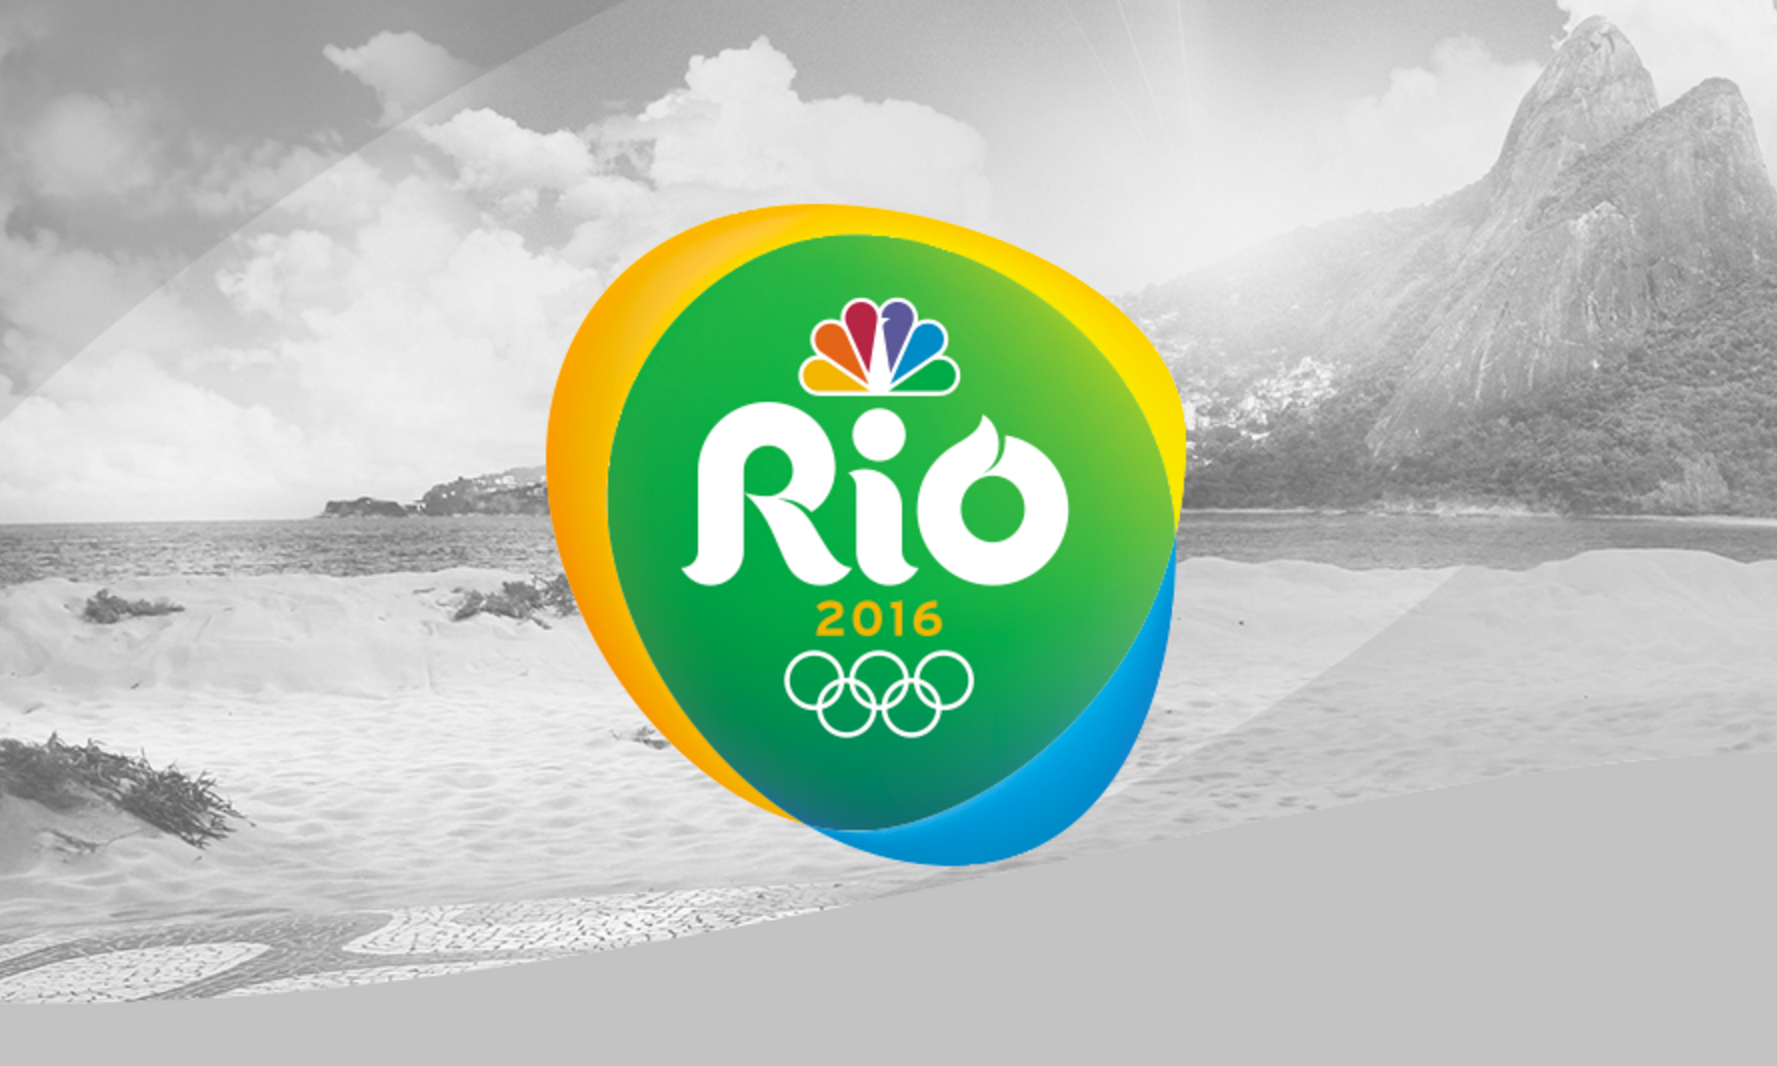 Rio com. Рио 2016. Rio реклама. Rio Olympics. Олимпик Абхазия лого.